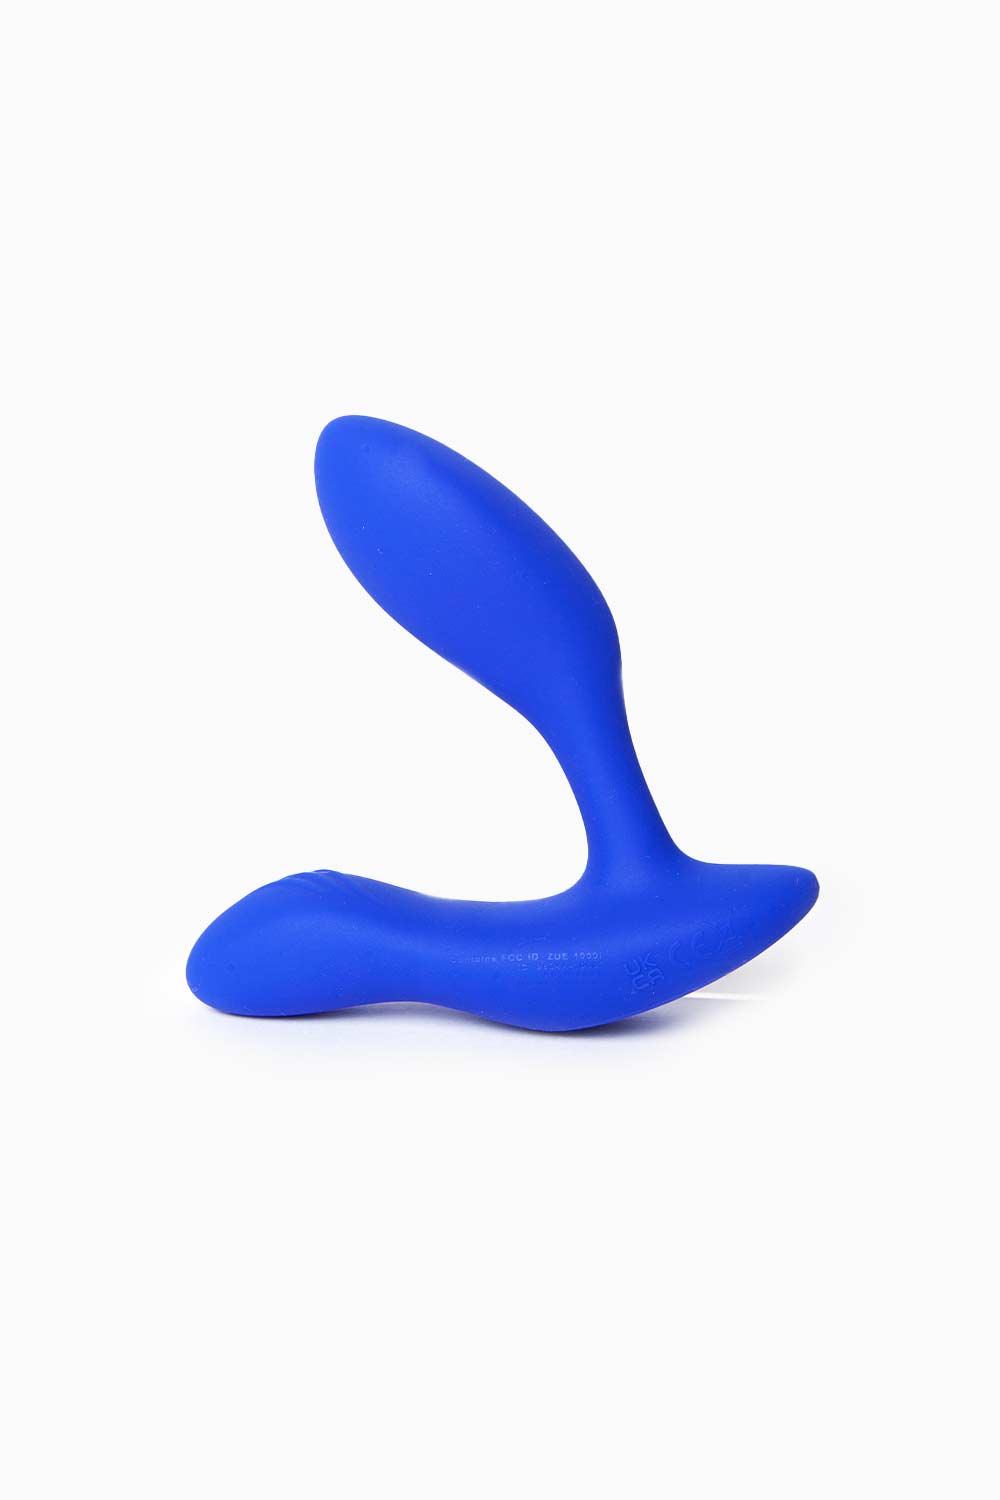 VECTOR+ ROYAL BLUE | Estimulador de Próstata